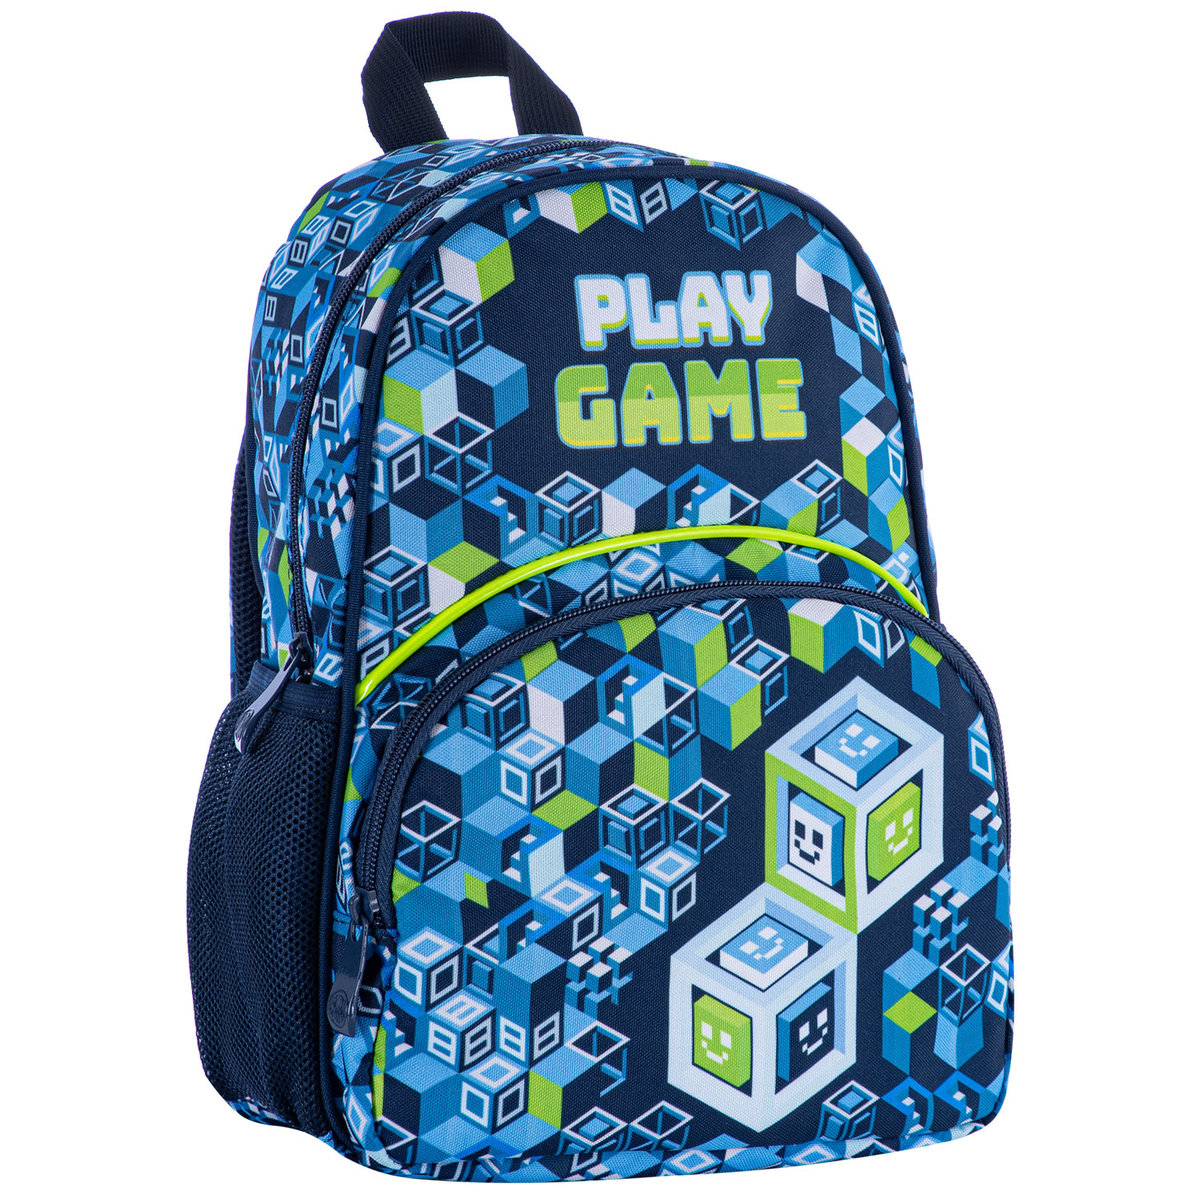 ASTRABAG Play Game Plecak szkolny Unisex dzieci